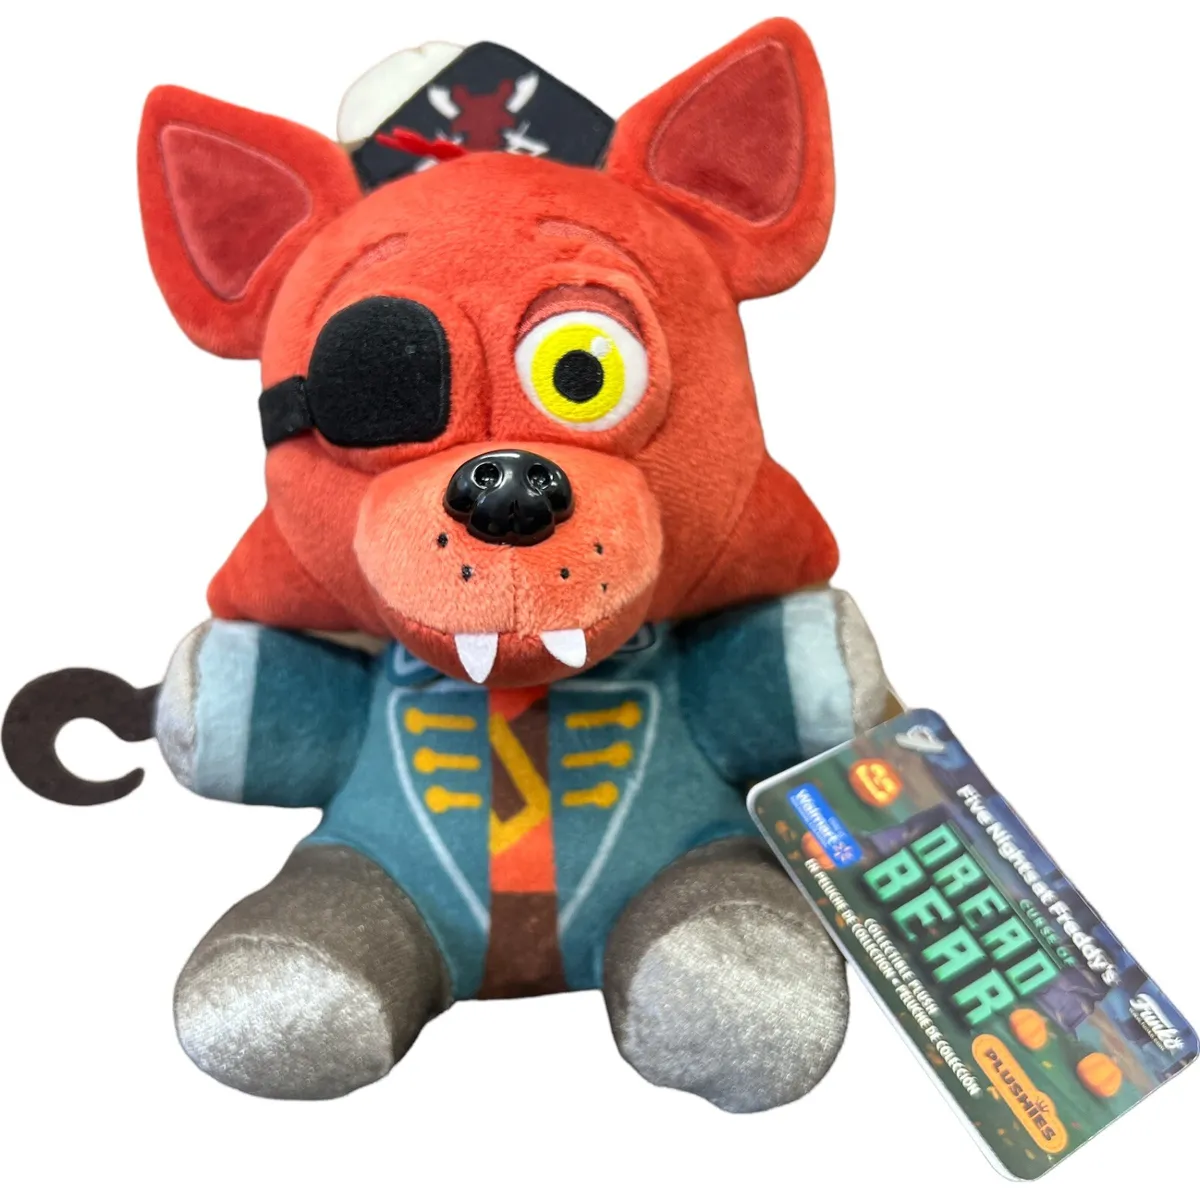 Funko Plush: Five Nights at Freddy's: Curse of Dreadbear - Captain Foxy 7  - Walmart Exclusive